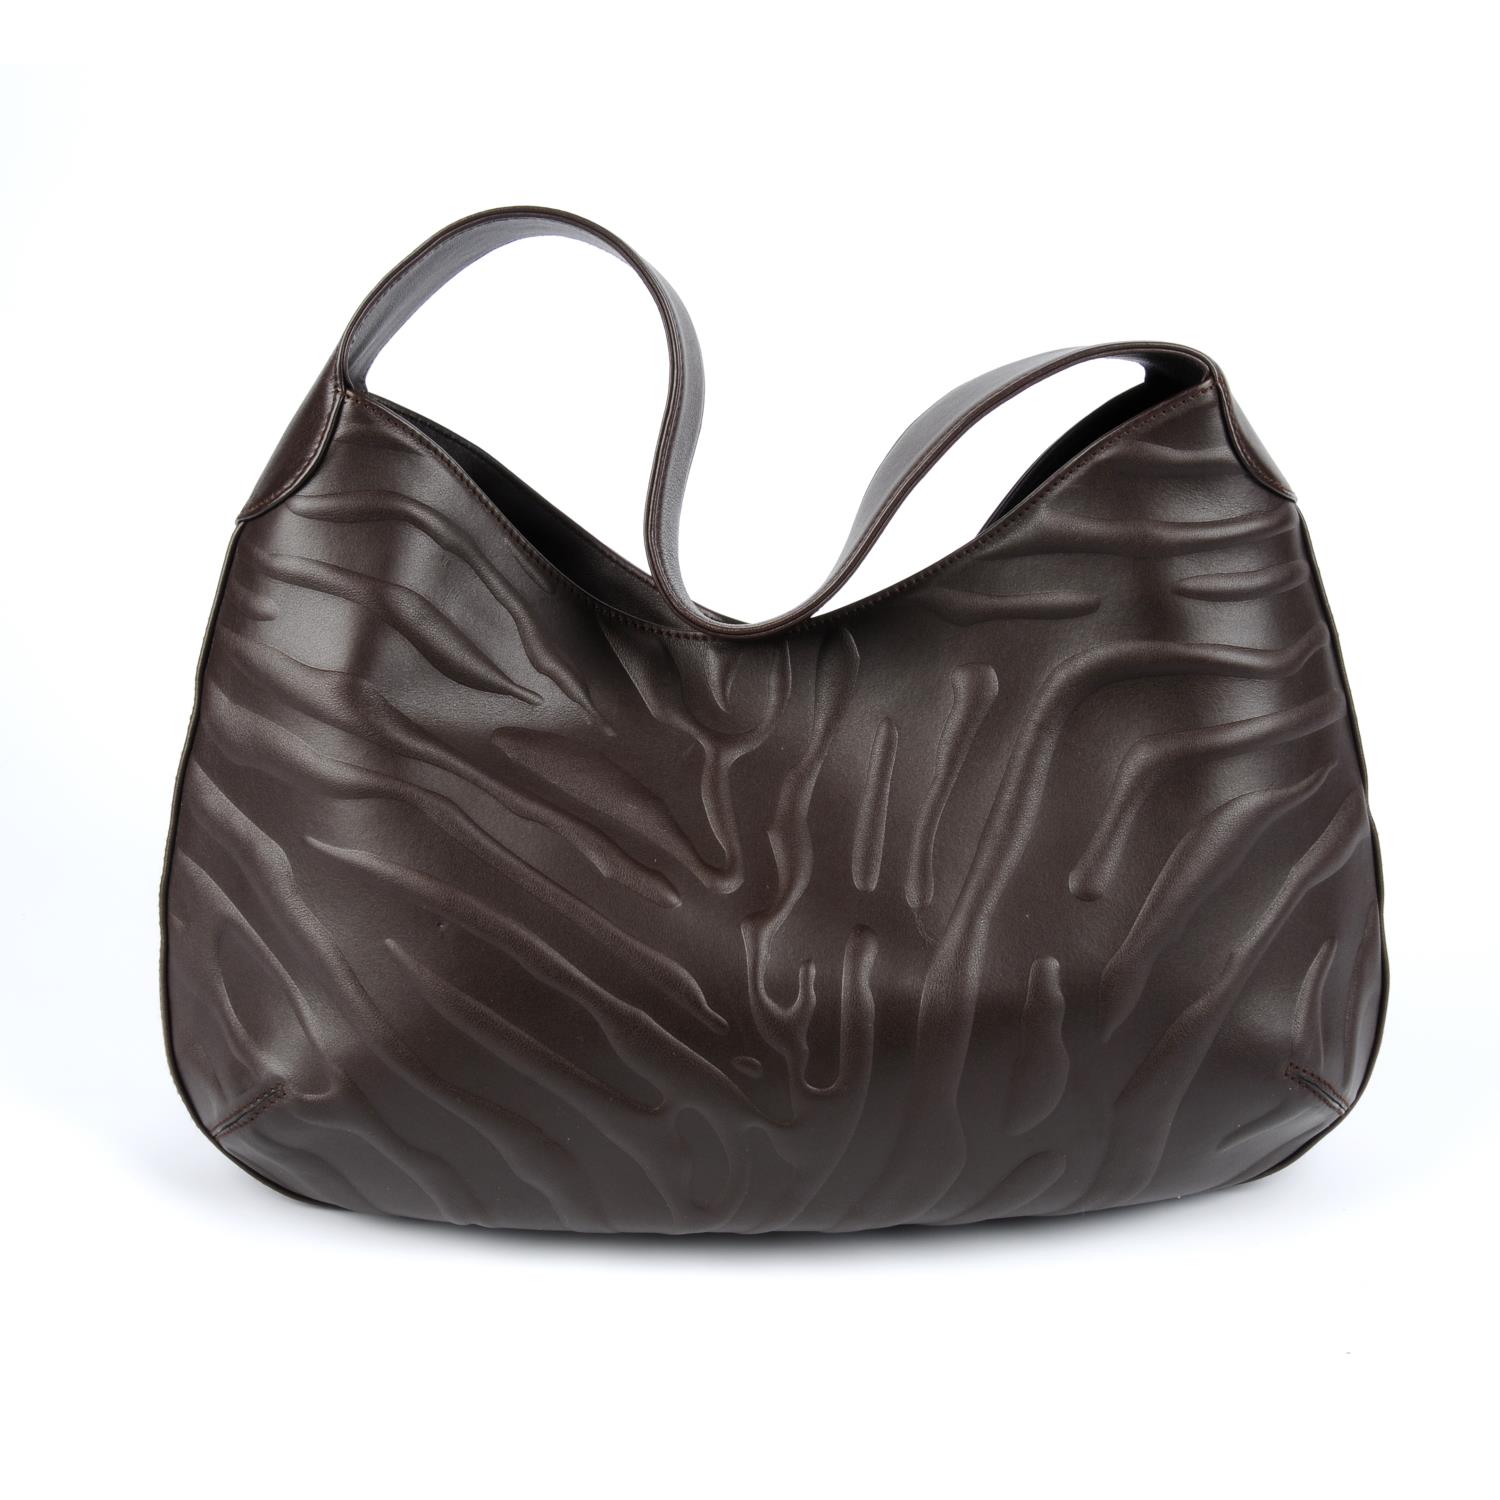 CARTIER - a medium brown Panthère hobo handbag. - Image 2 of 4